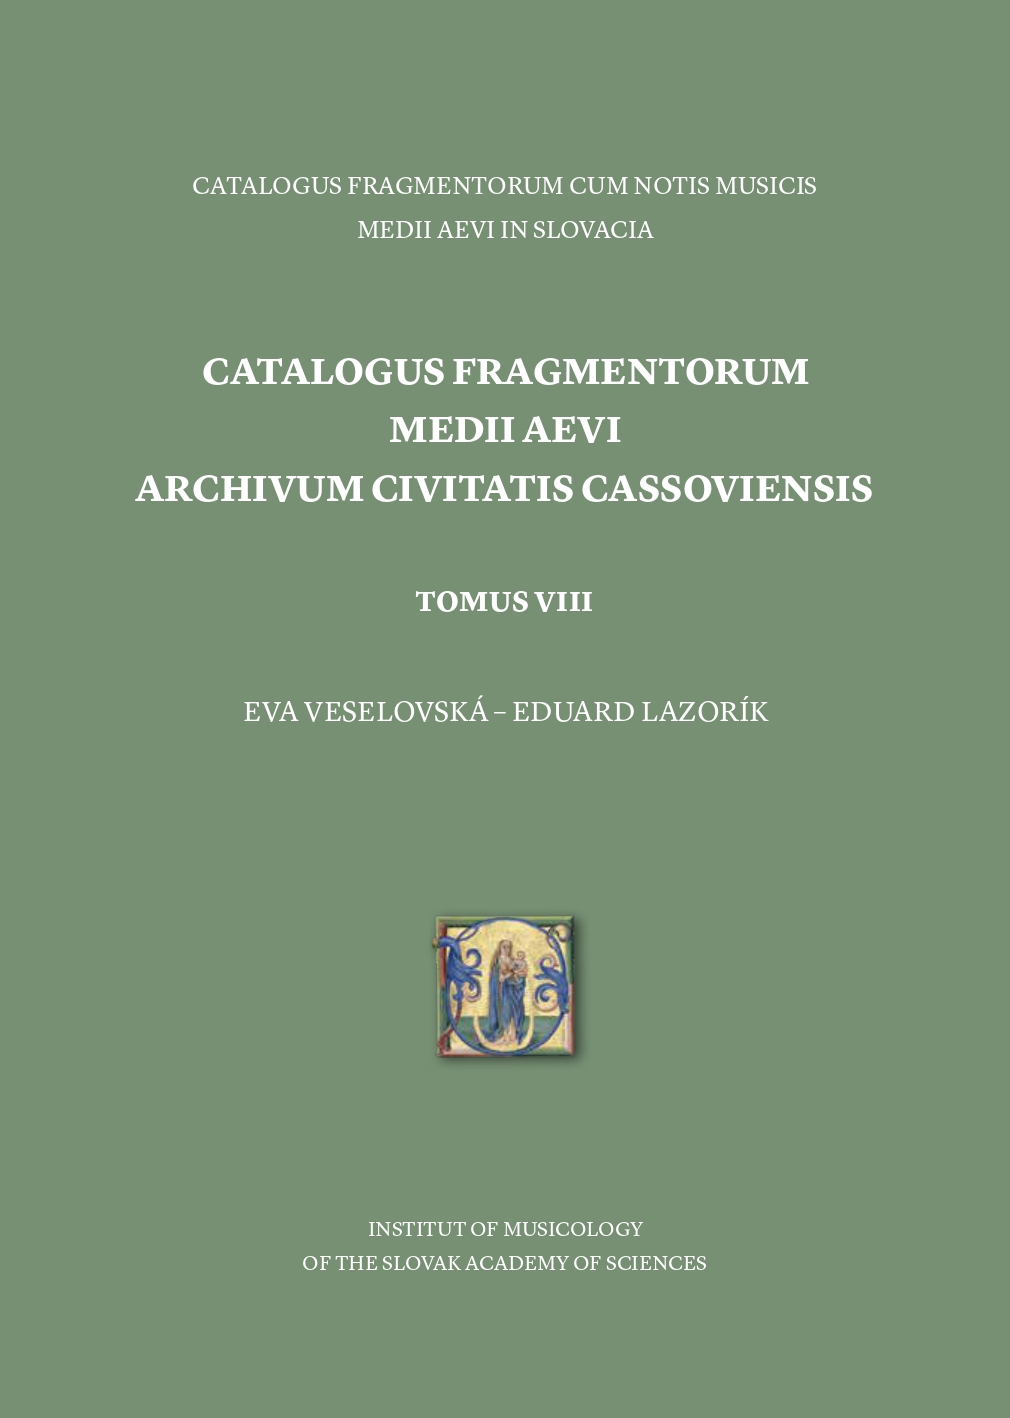 Catalogus fragmentorum medii aevi - Archivum Civitatis Cassoviensis: Catalogus fragmentorum cum notis musicis medii aevi in Slovaca, Tomus VIII